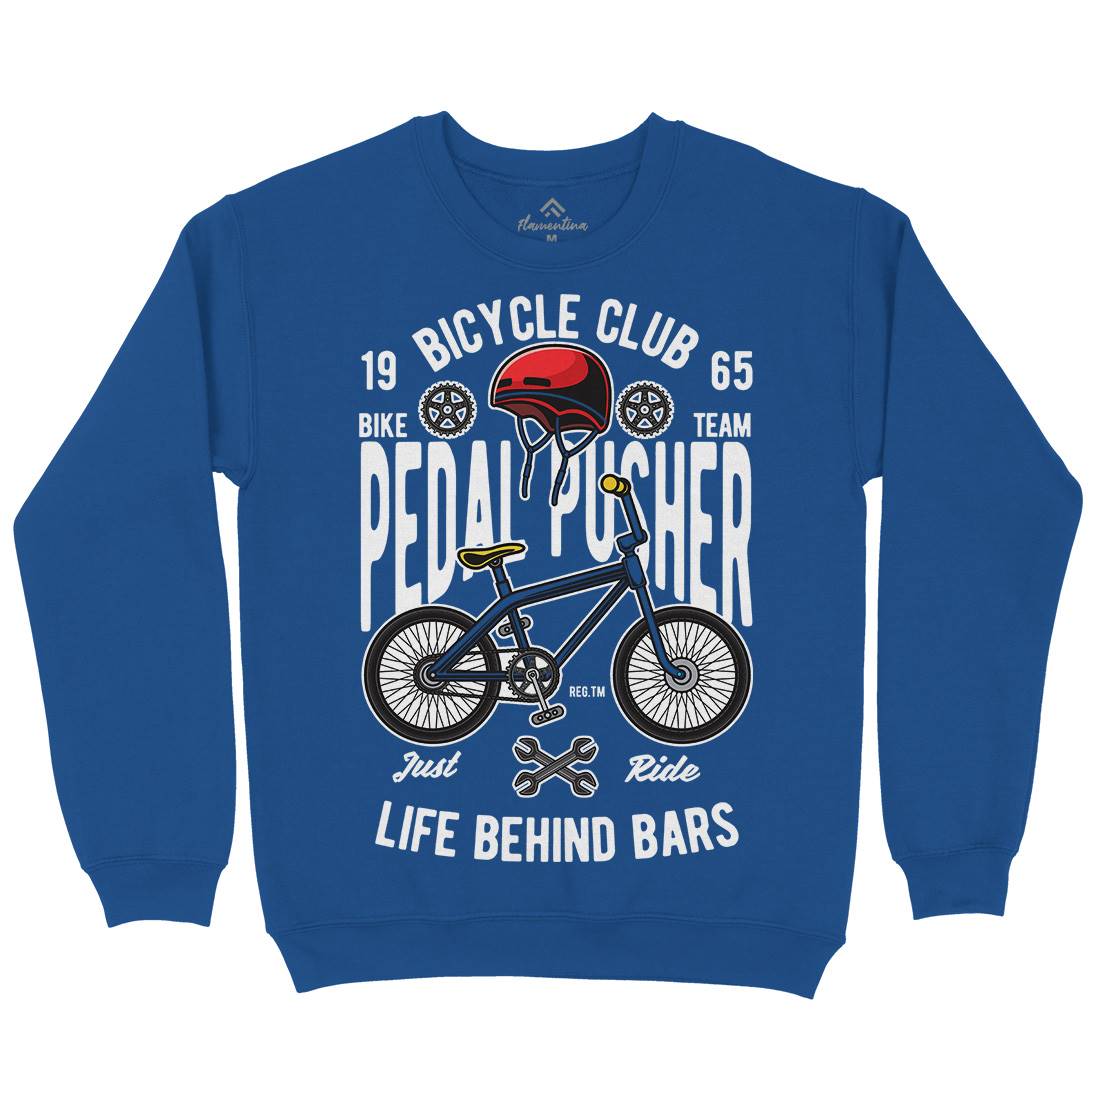 Pedal Pusher Kids Crew Neck Sweatshirt Bikes C411